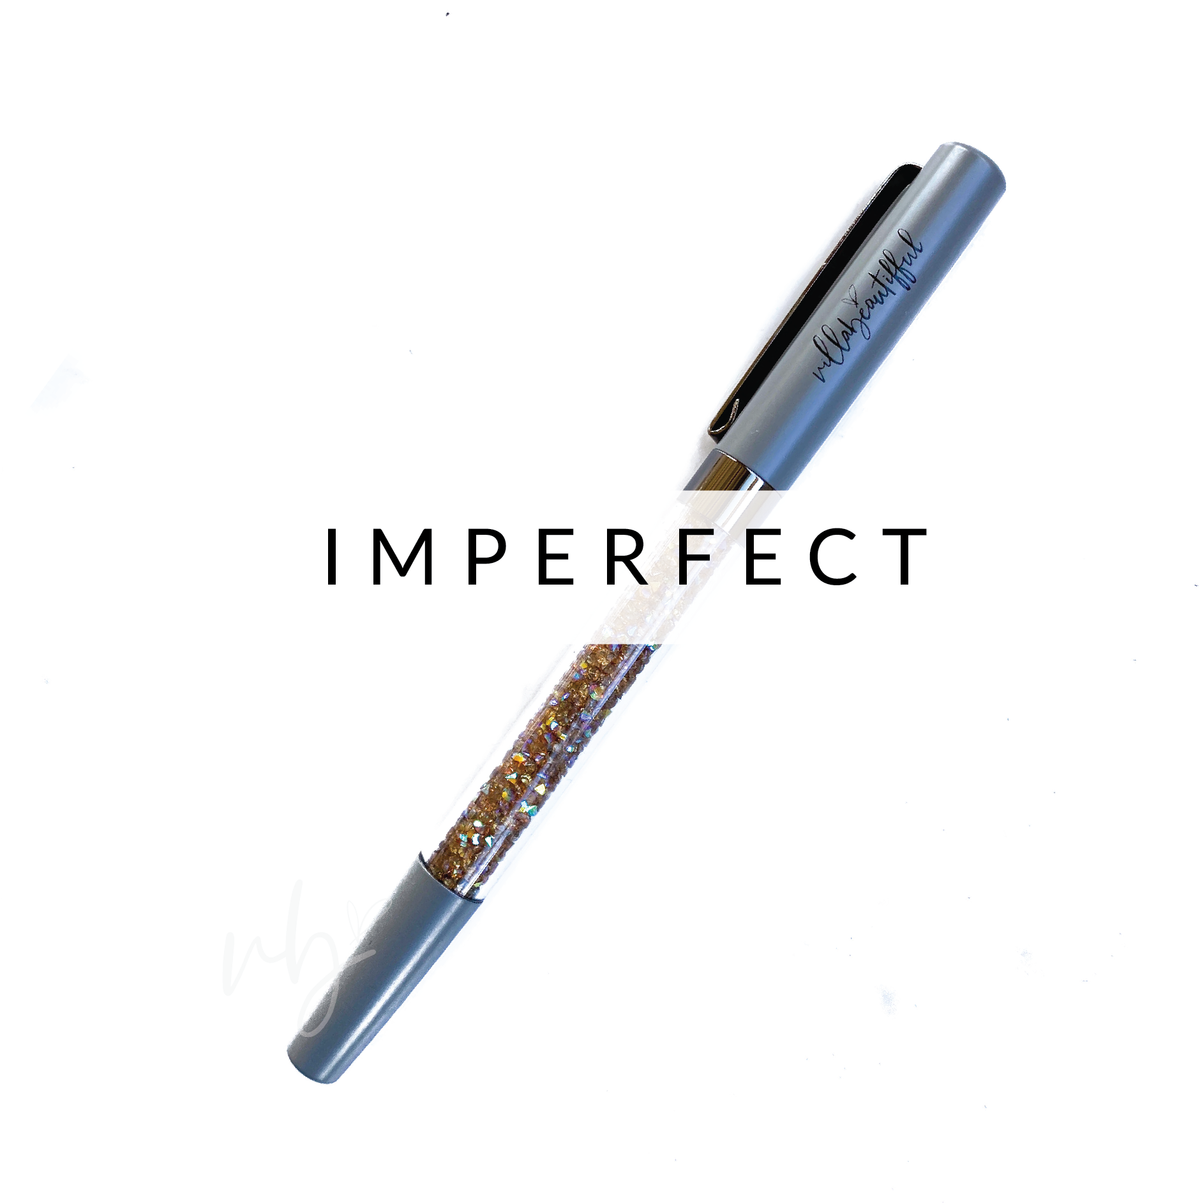 Obsidian IMPERFECT Crystal VBPen | limited pen